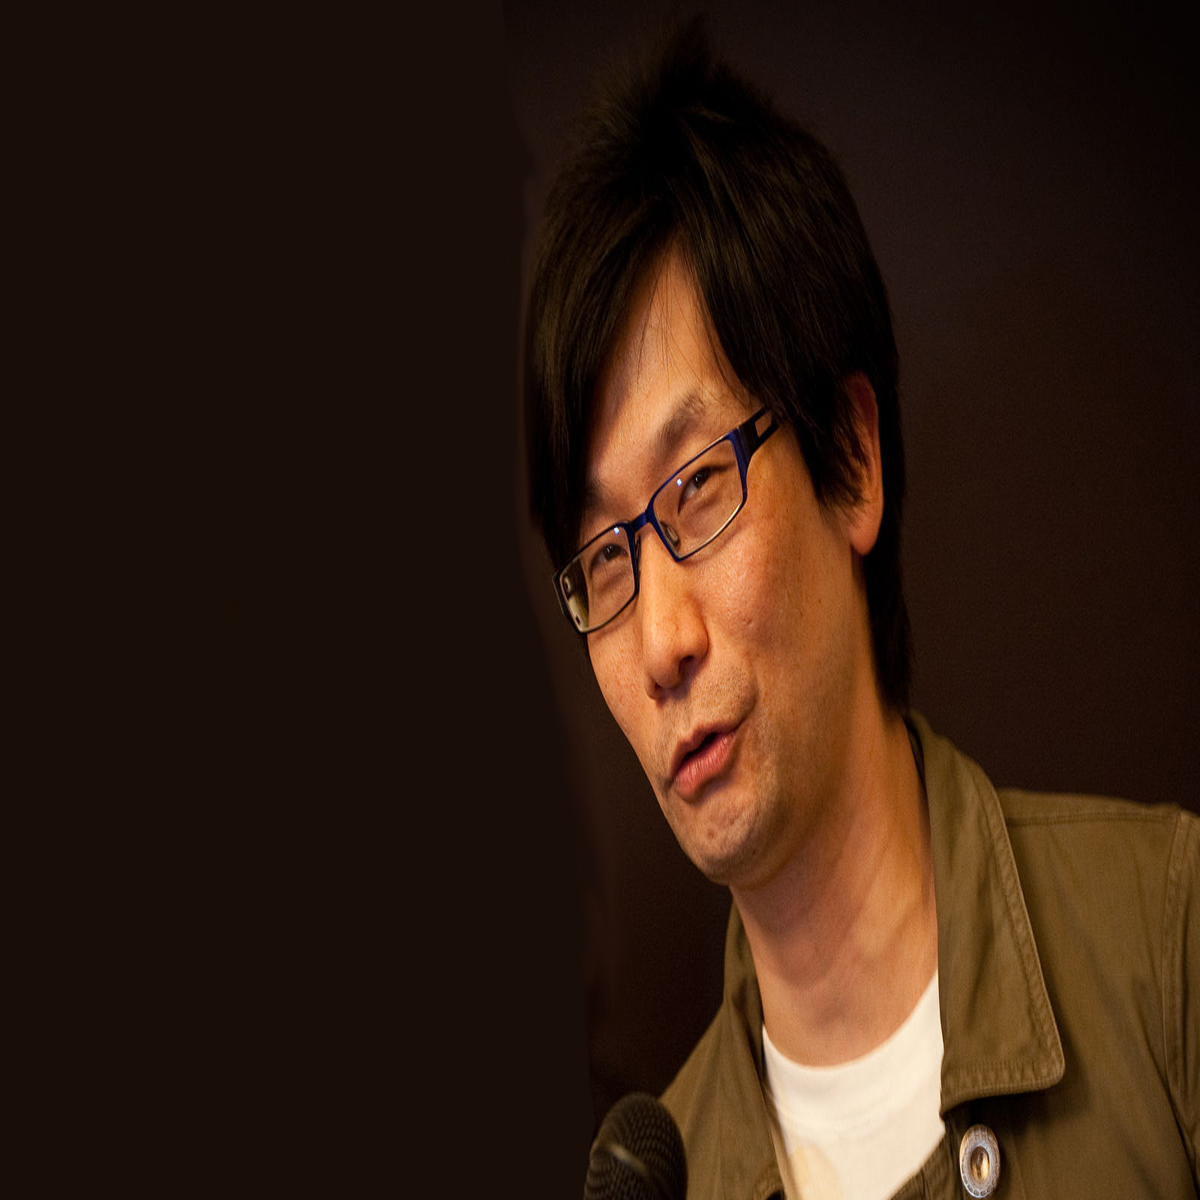 Overdose, Kojima's next game, has seemingly leaked